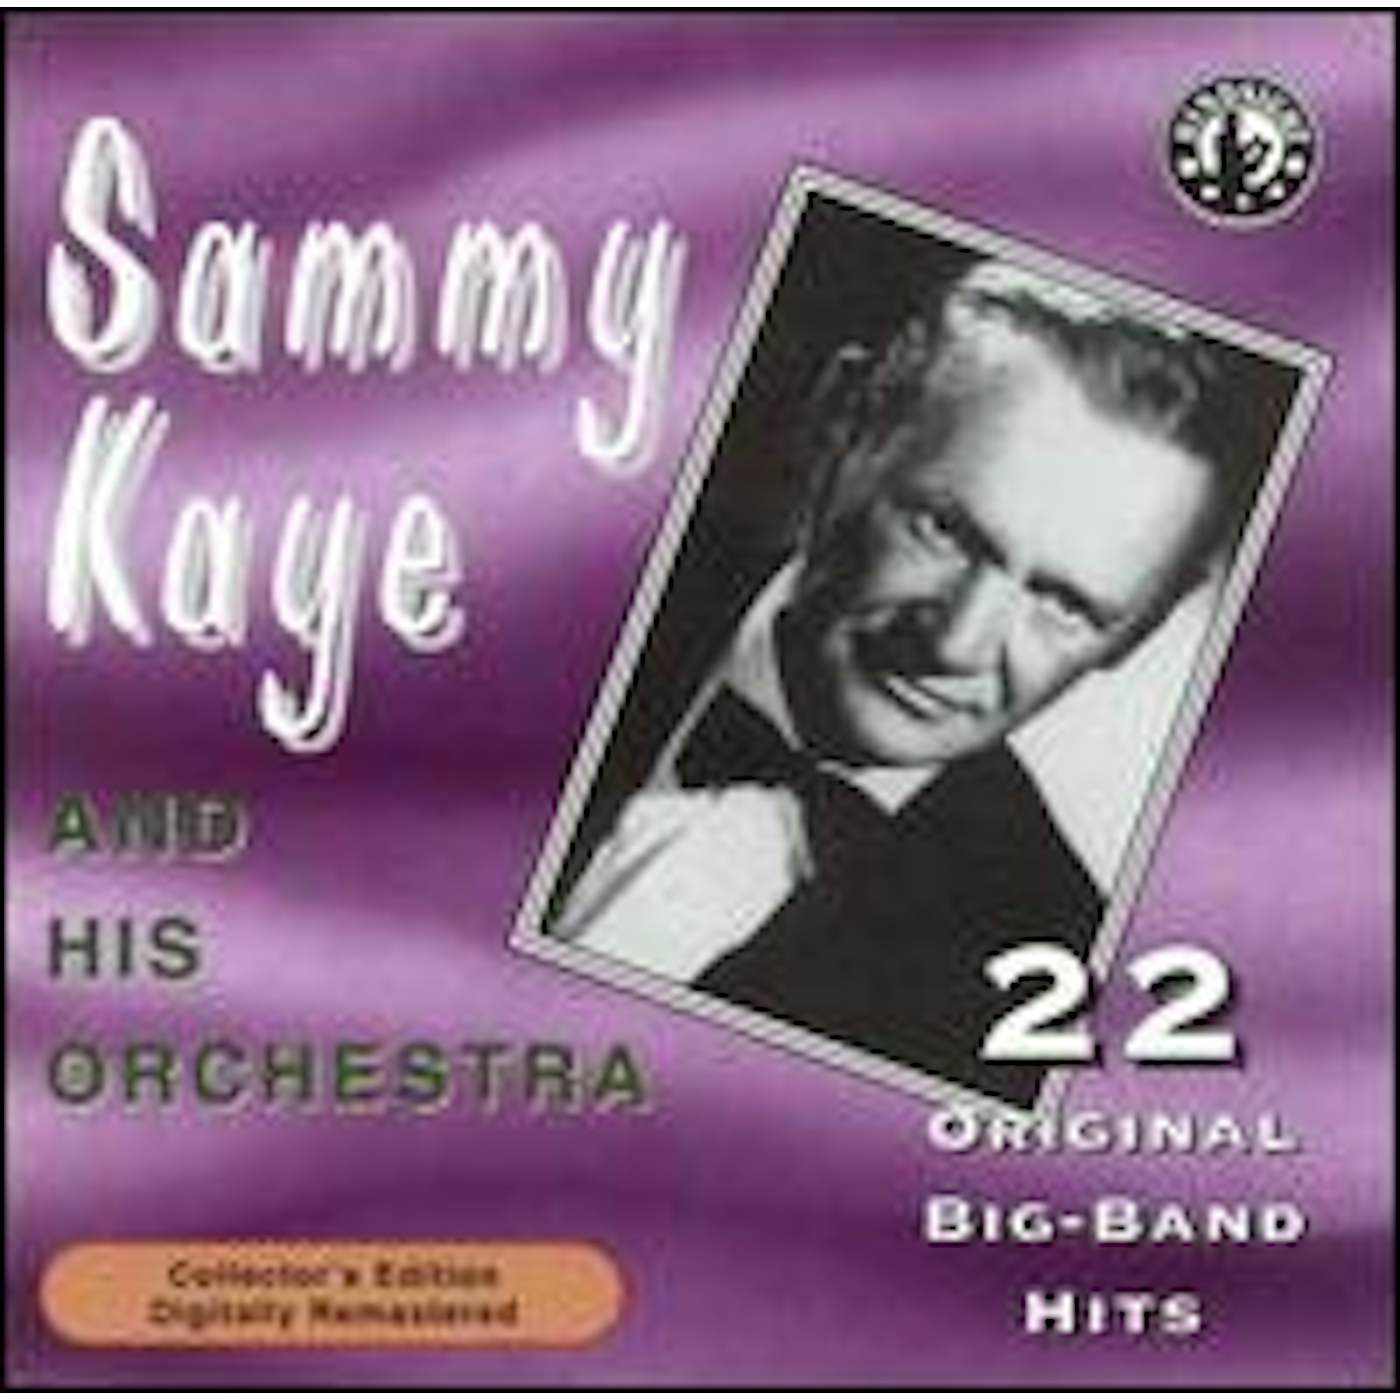 Sammy Kaye PLAYS 22 ORIGINAL BIG BAND RECORDINGS CD